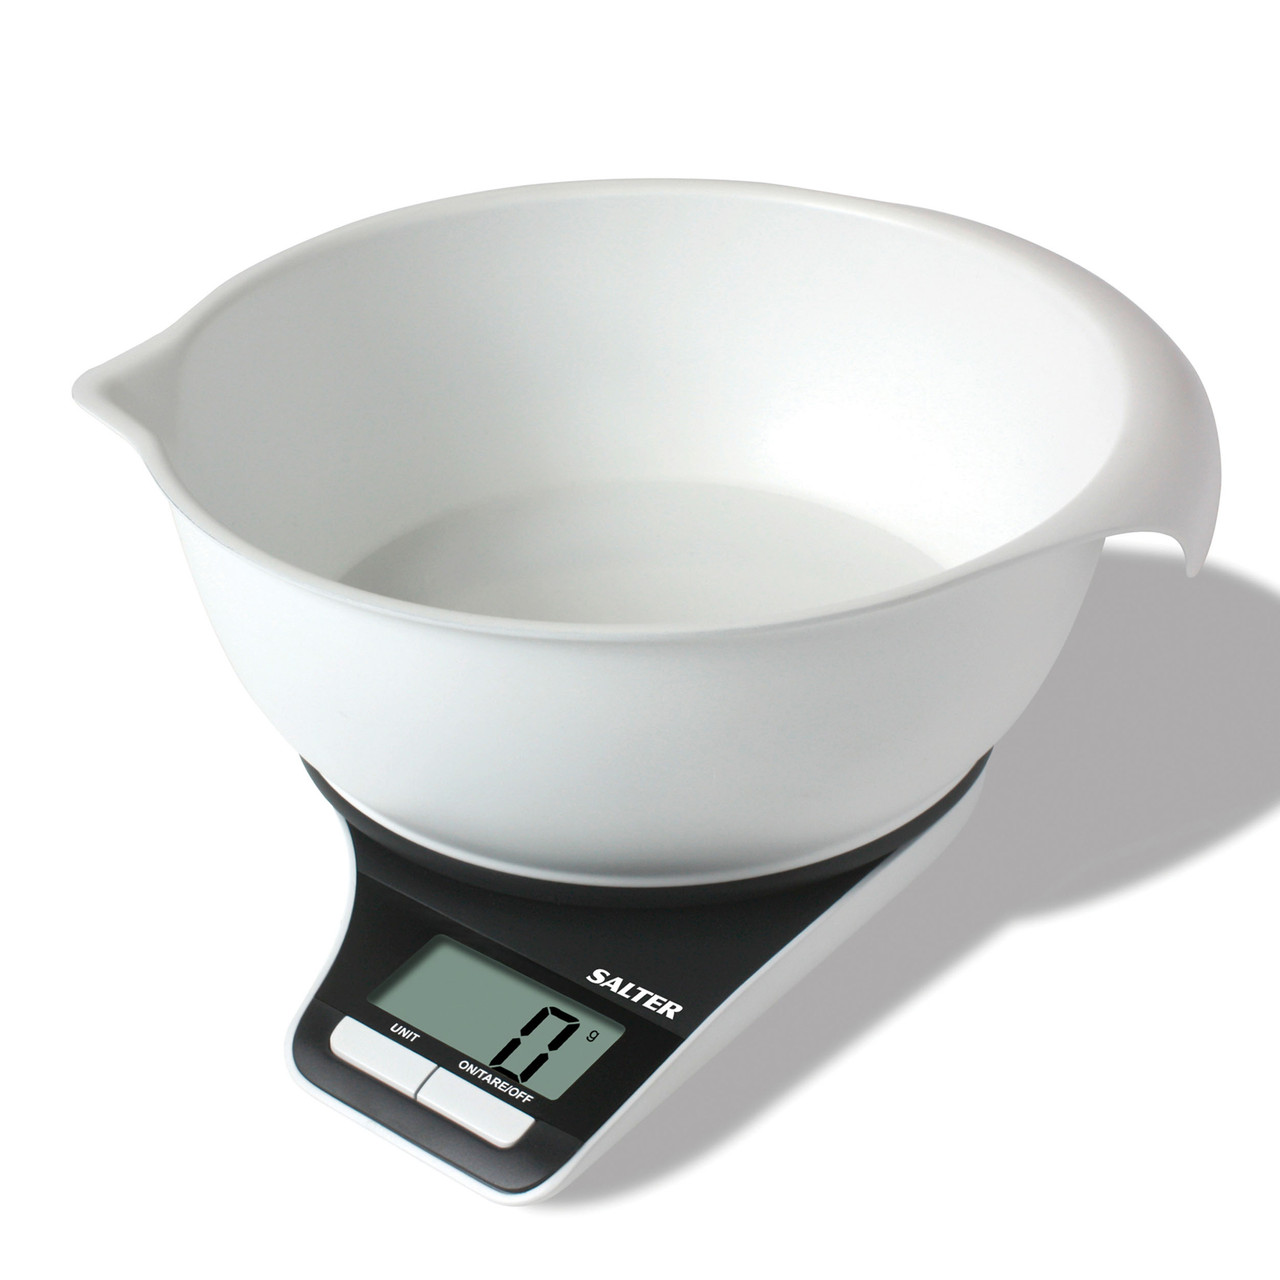 Jug Digital Kitchen Scale, 5kg Capacity